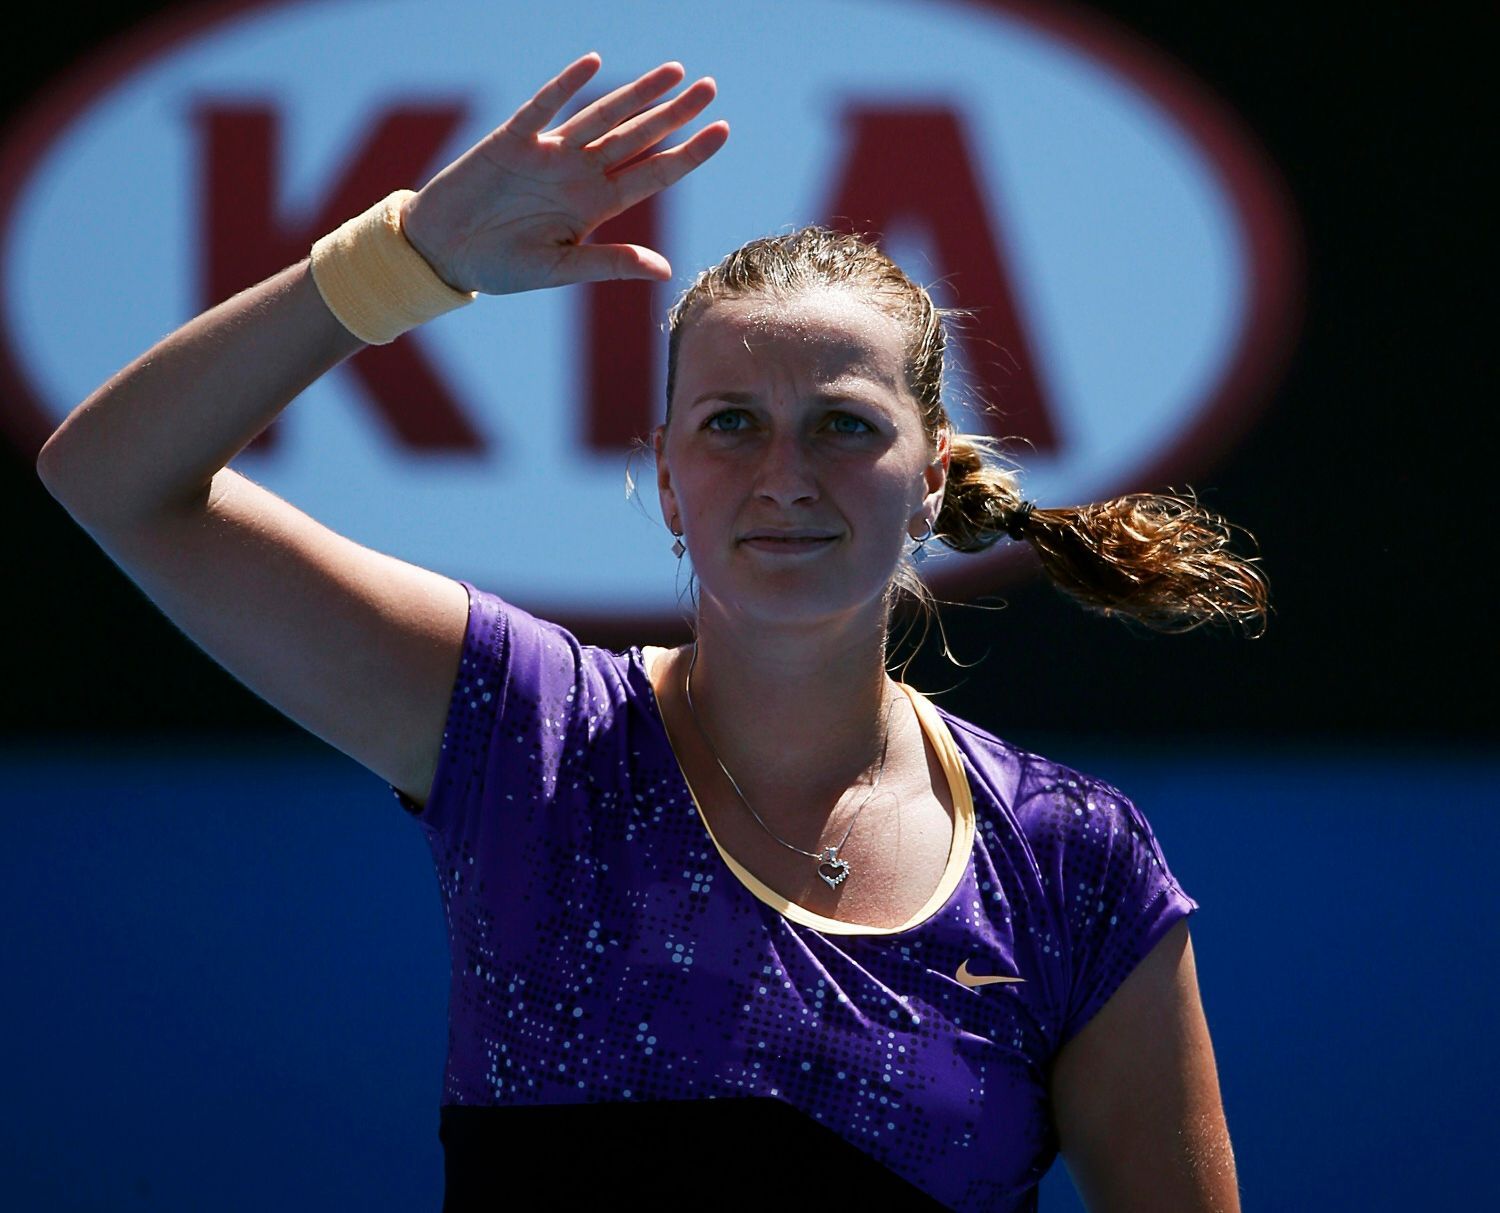 Australian Open: Petra Kvitová